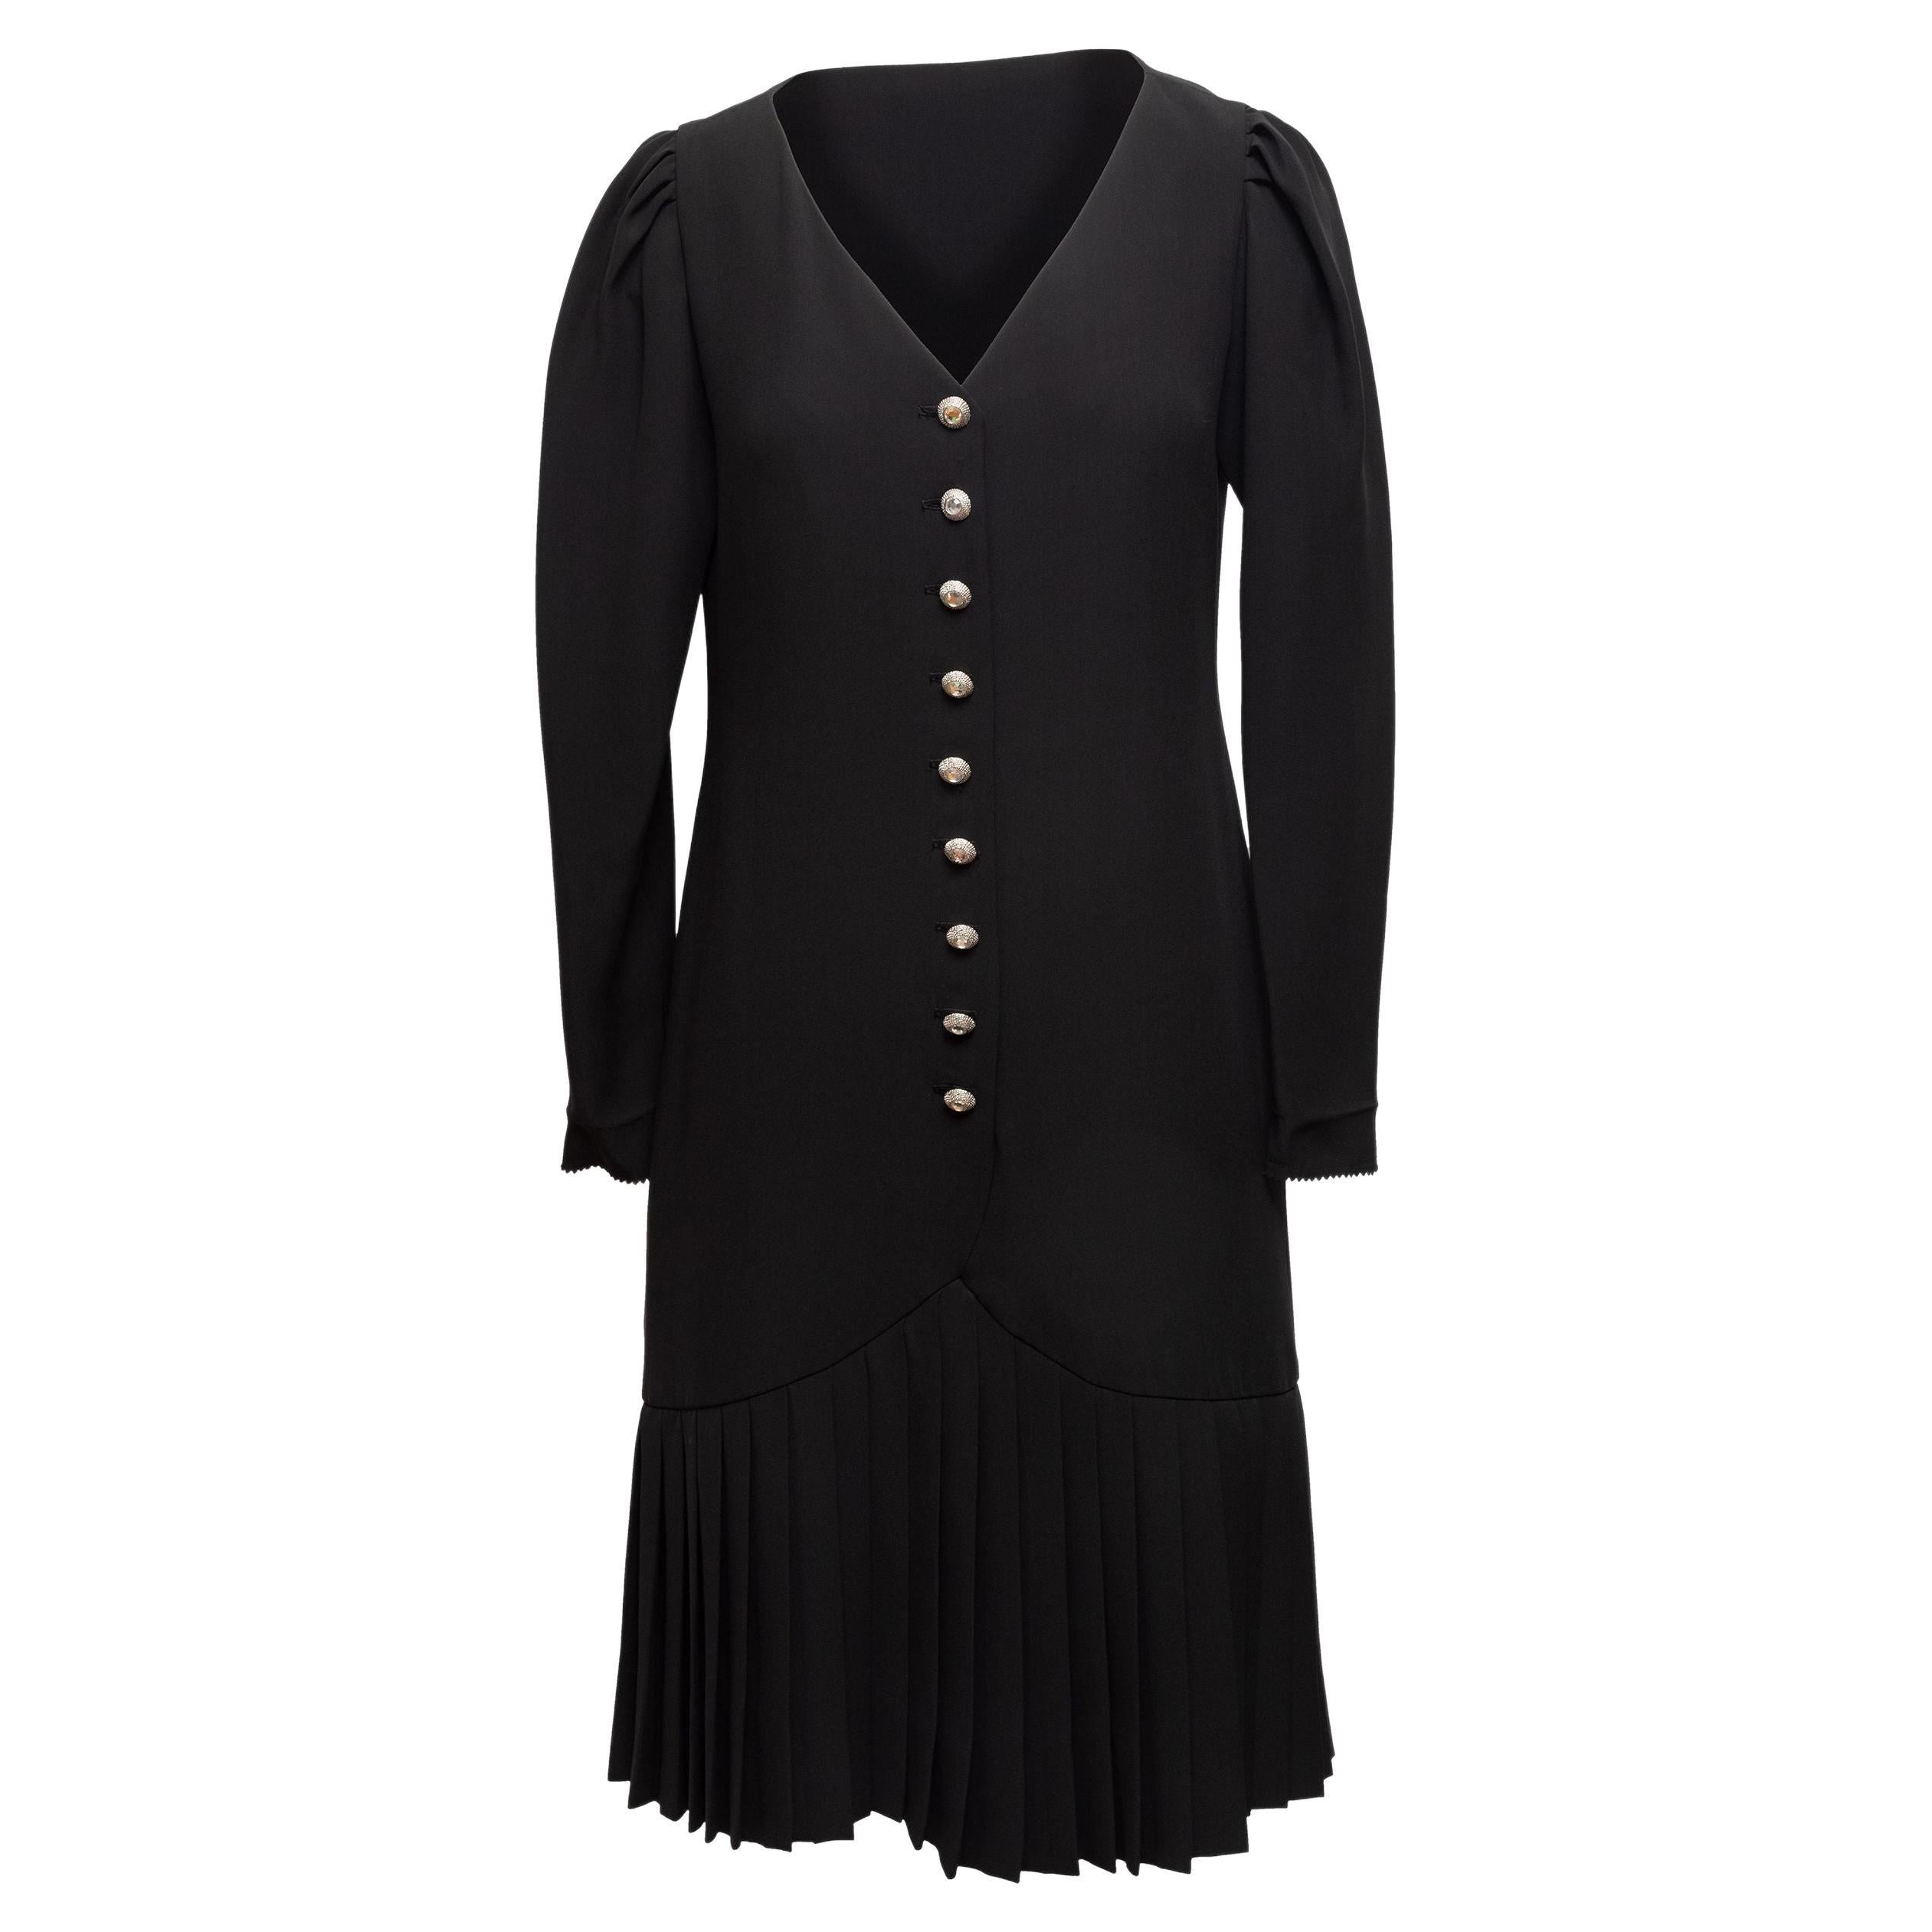 Adele Simpson Black Long Sleeve Button-Up Dress